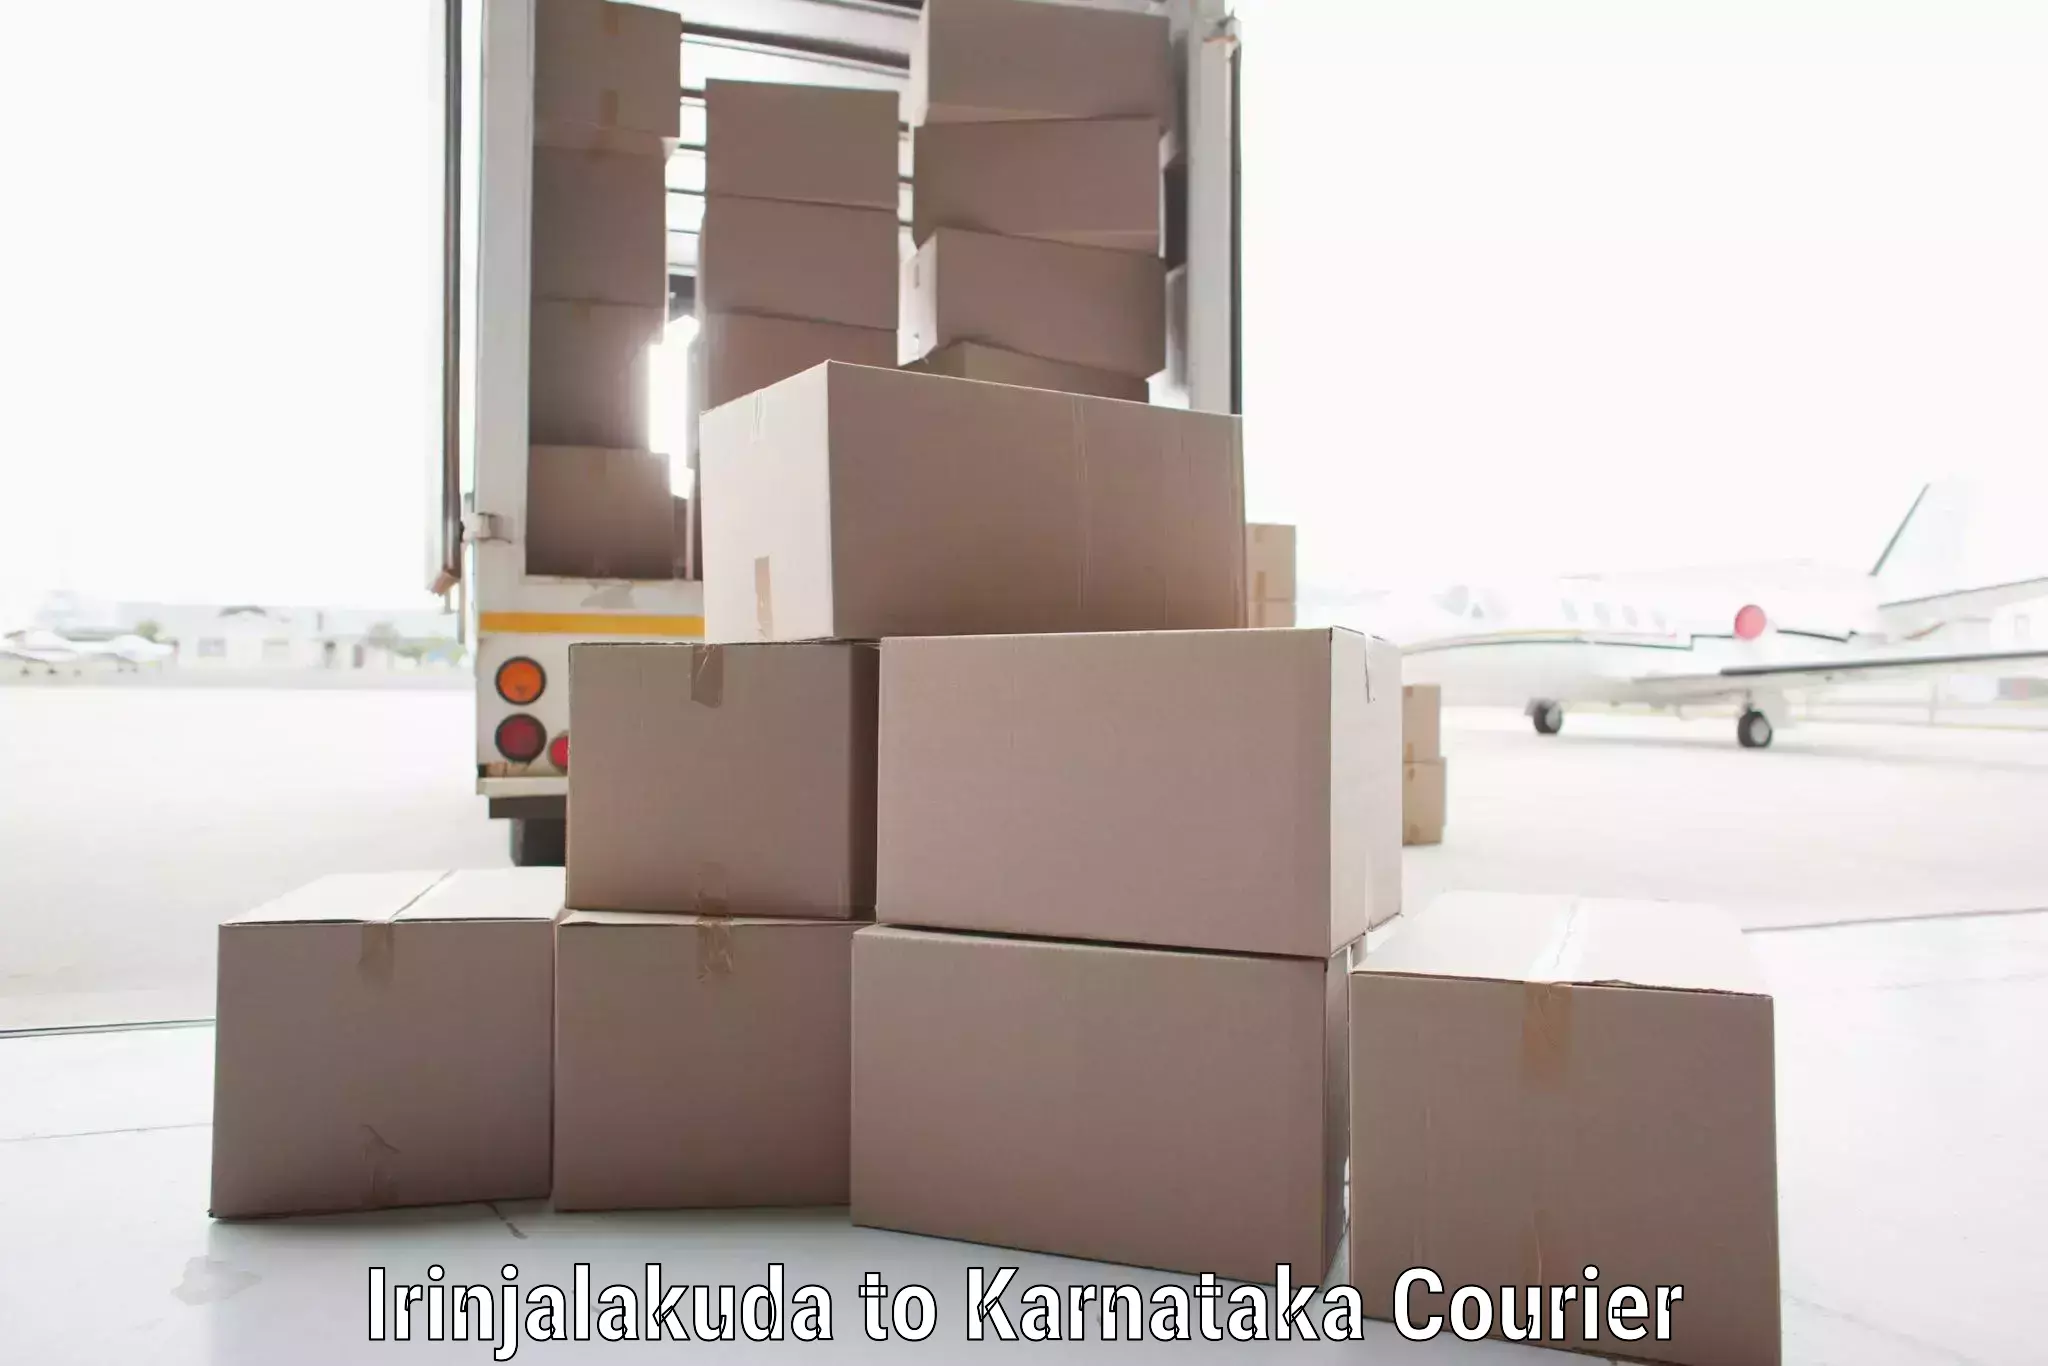 Tech-enabled shipping Irinjalakuda to Hoovina Hadagali